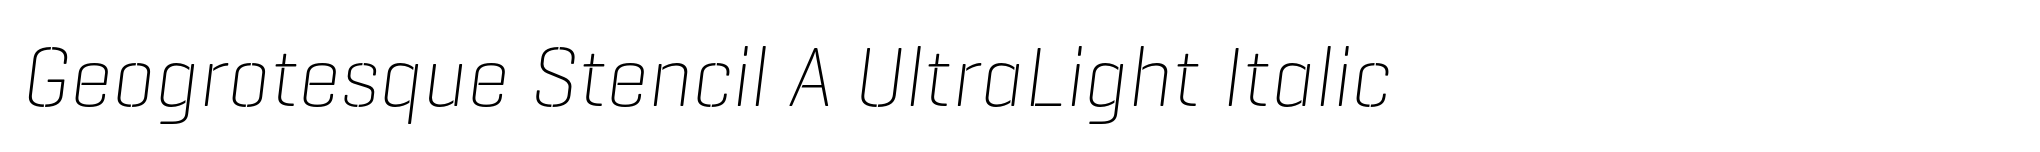 Geogrotesque Stencil A UltraLight Italic image